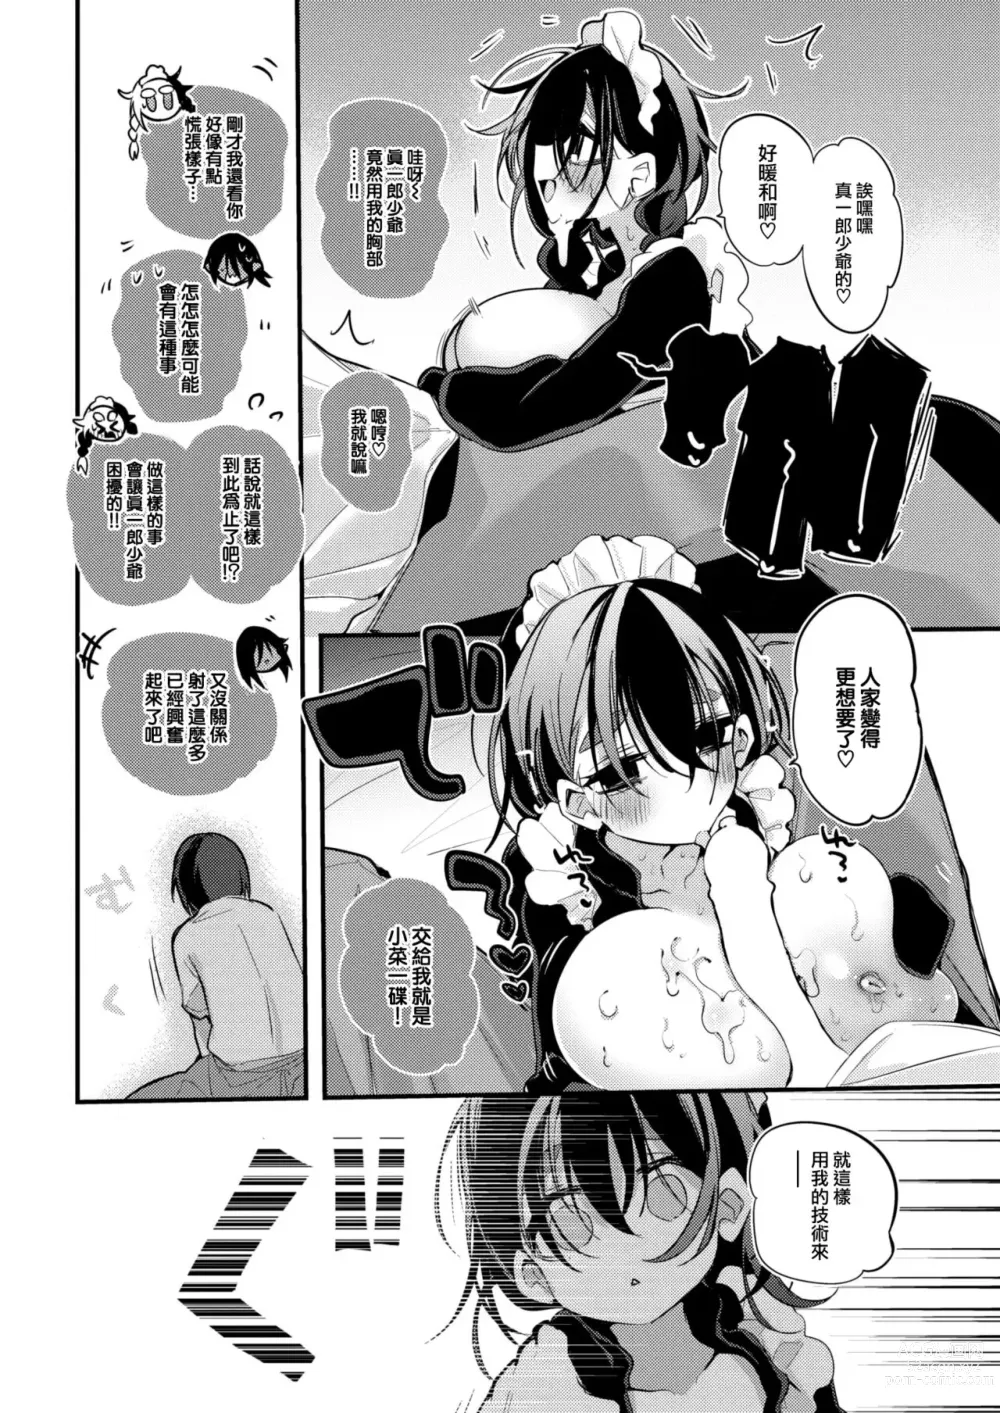 Page 11 of manga Akumade Maid desukara!